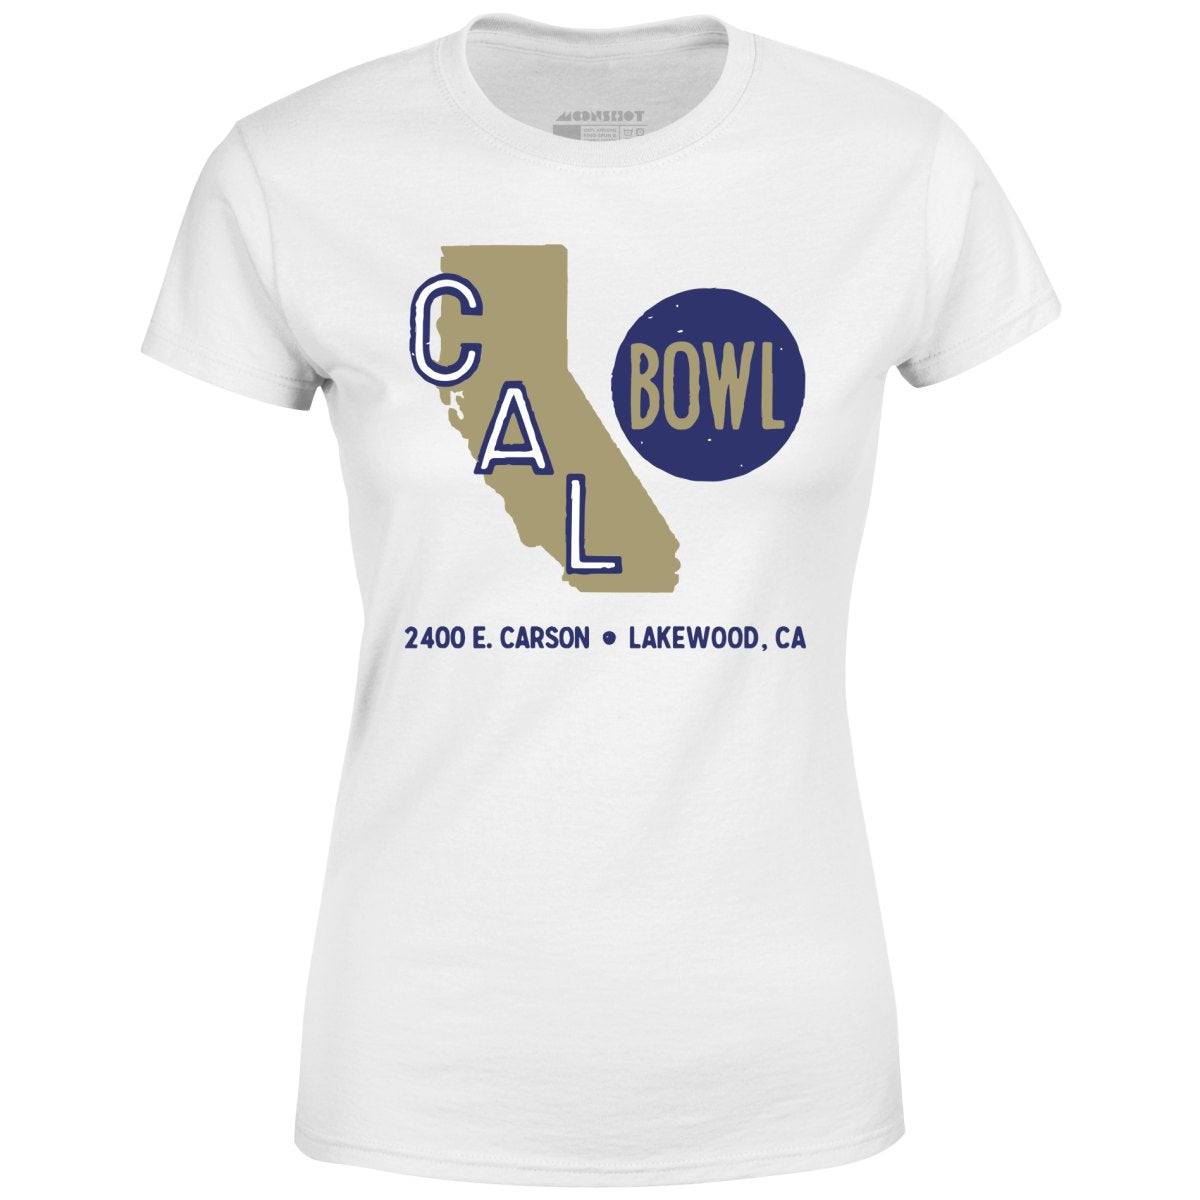 Cal Bowl - Lakewood, CA - Vintage Bowling Alley - Women's T-Shirt